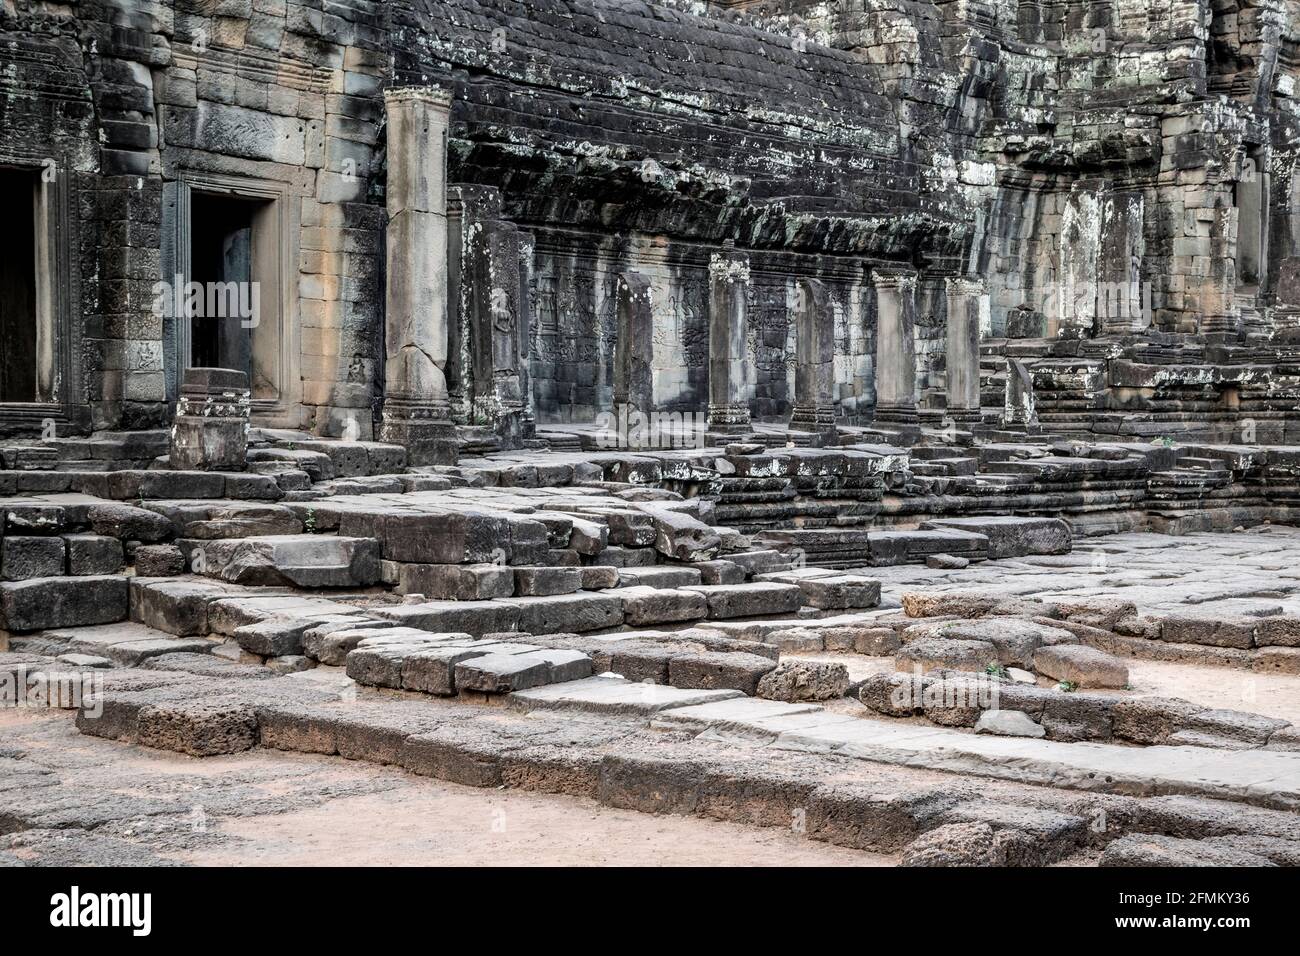 Cortile, Tempio di Bayon, Angkor Thom, Parco Archeologico di Angkor, Siem Reap, Cambogia Foto Stock